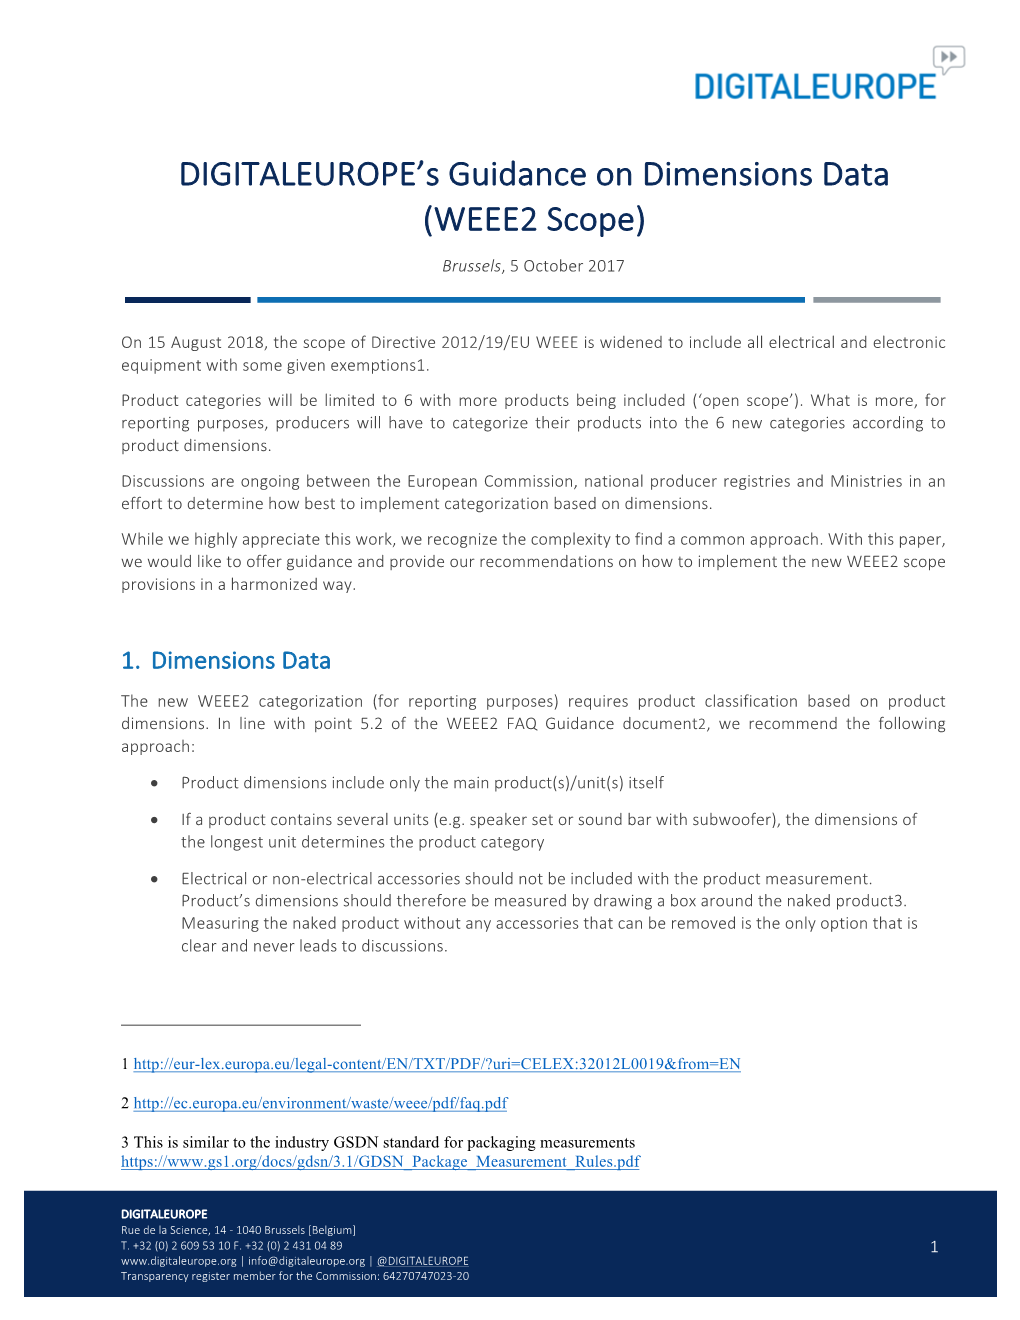 DIGITALEUROPE's Guidance on Dimensions Data (WEEE2 Scope)